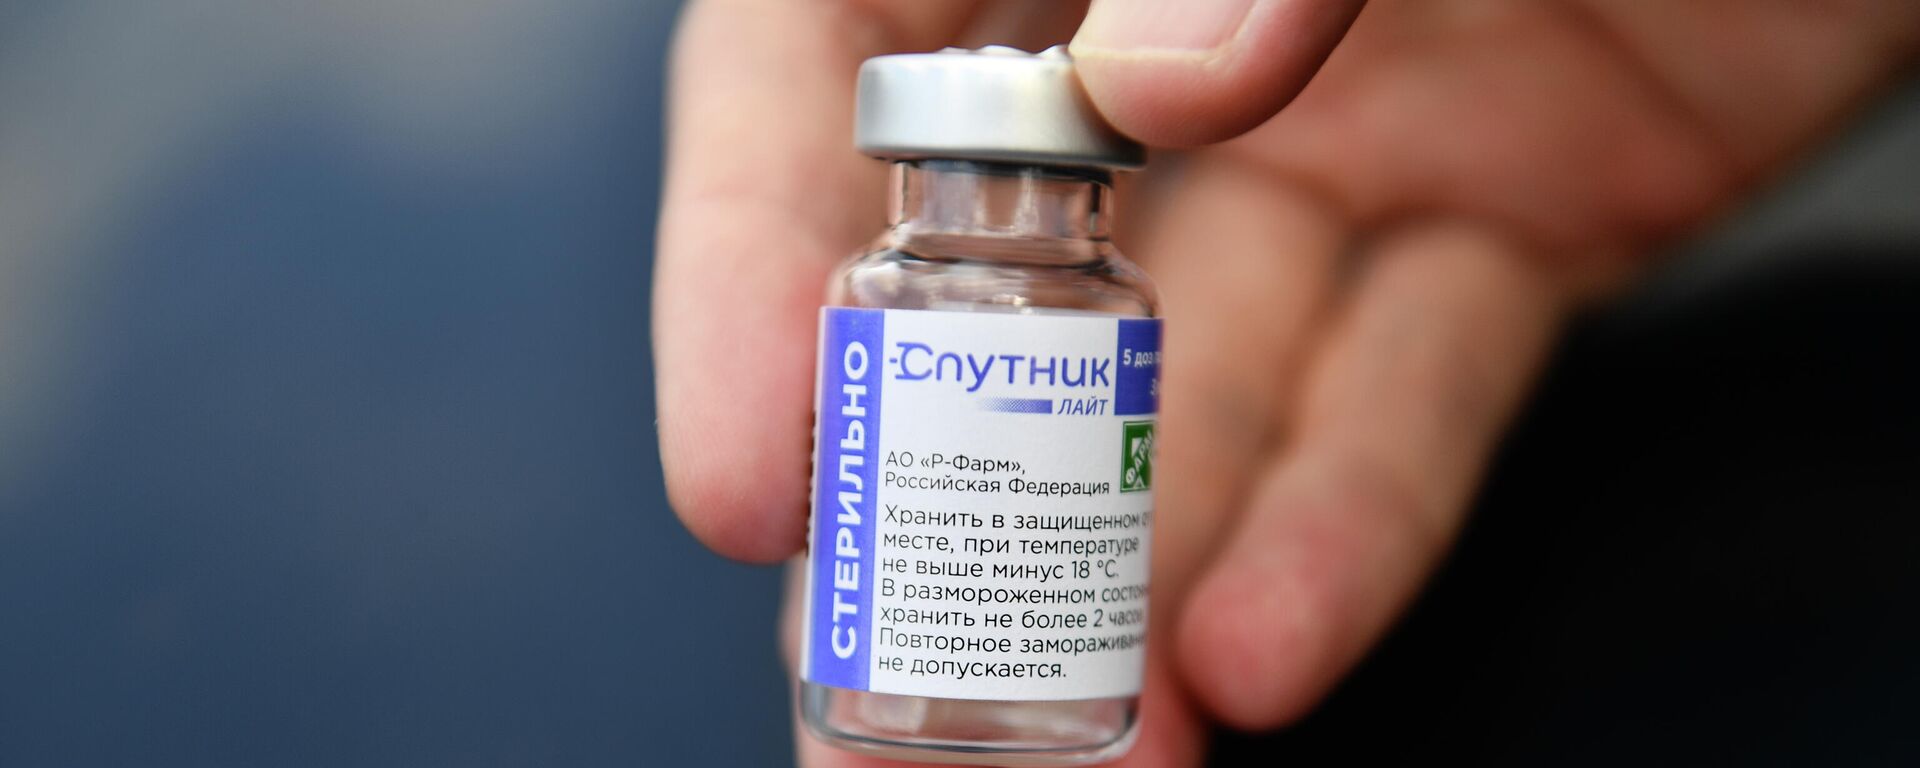 Russia's Sputnik Light vaccine against COVID-19. - Sputnik International, 1920, 13.10.2021